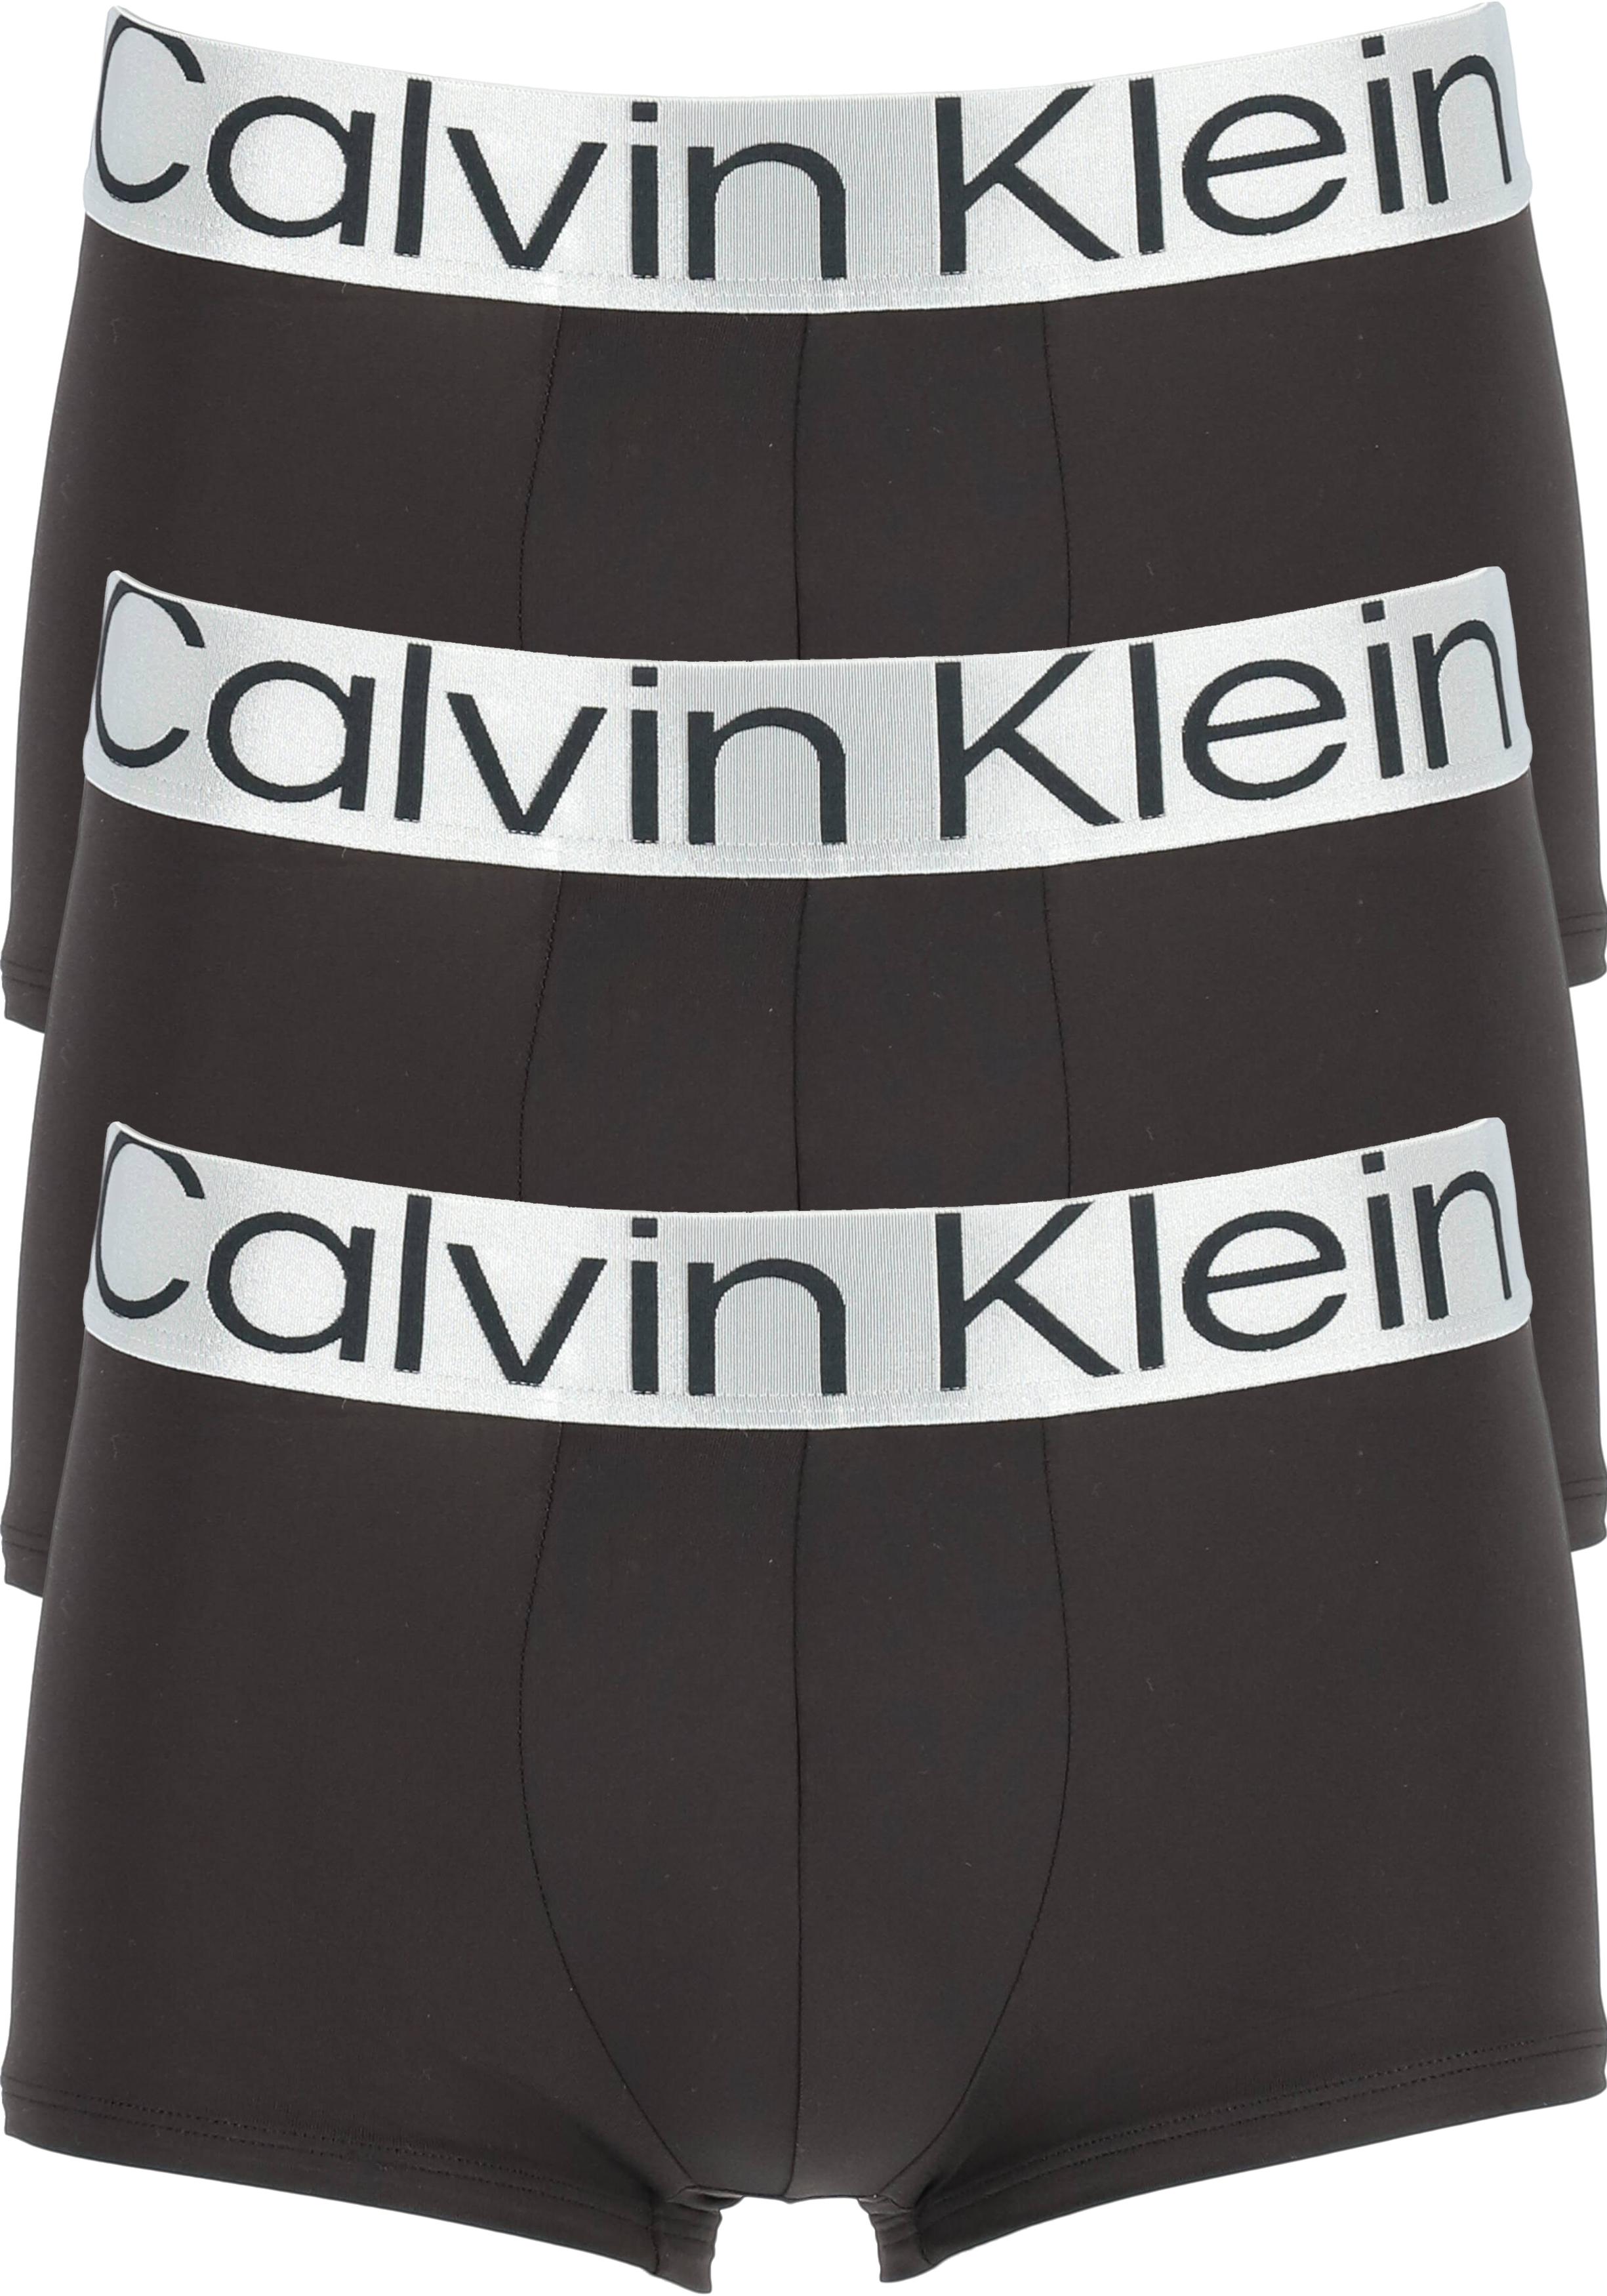 noodsituatie propeller Beide Calvin Klein low rise trunks (3-pack), microfiber lage heren boxers... -  SALE tot 70% korting